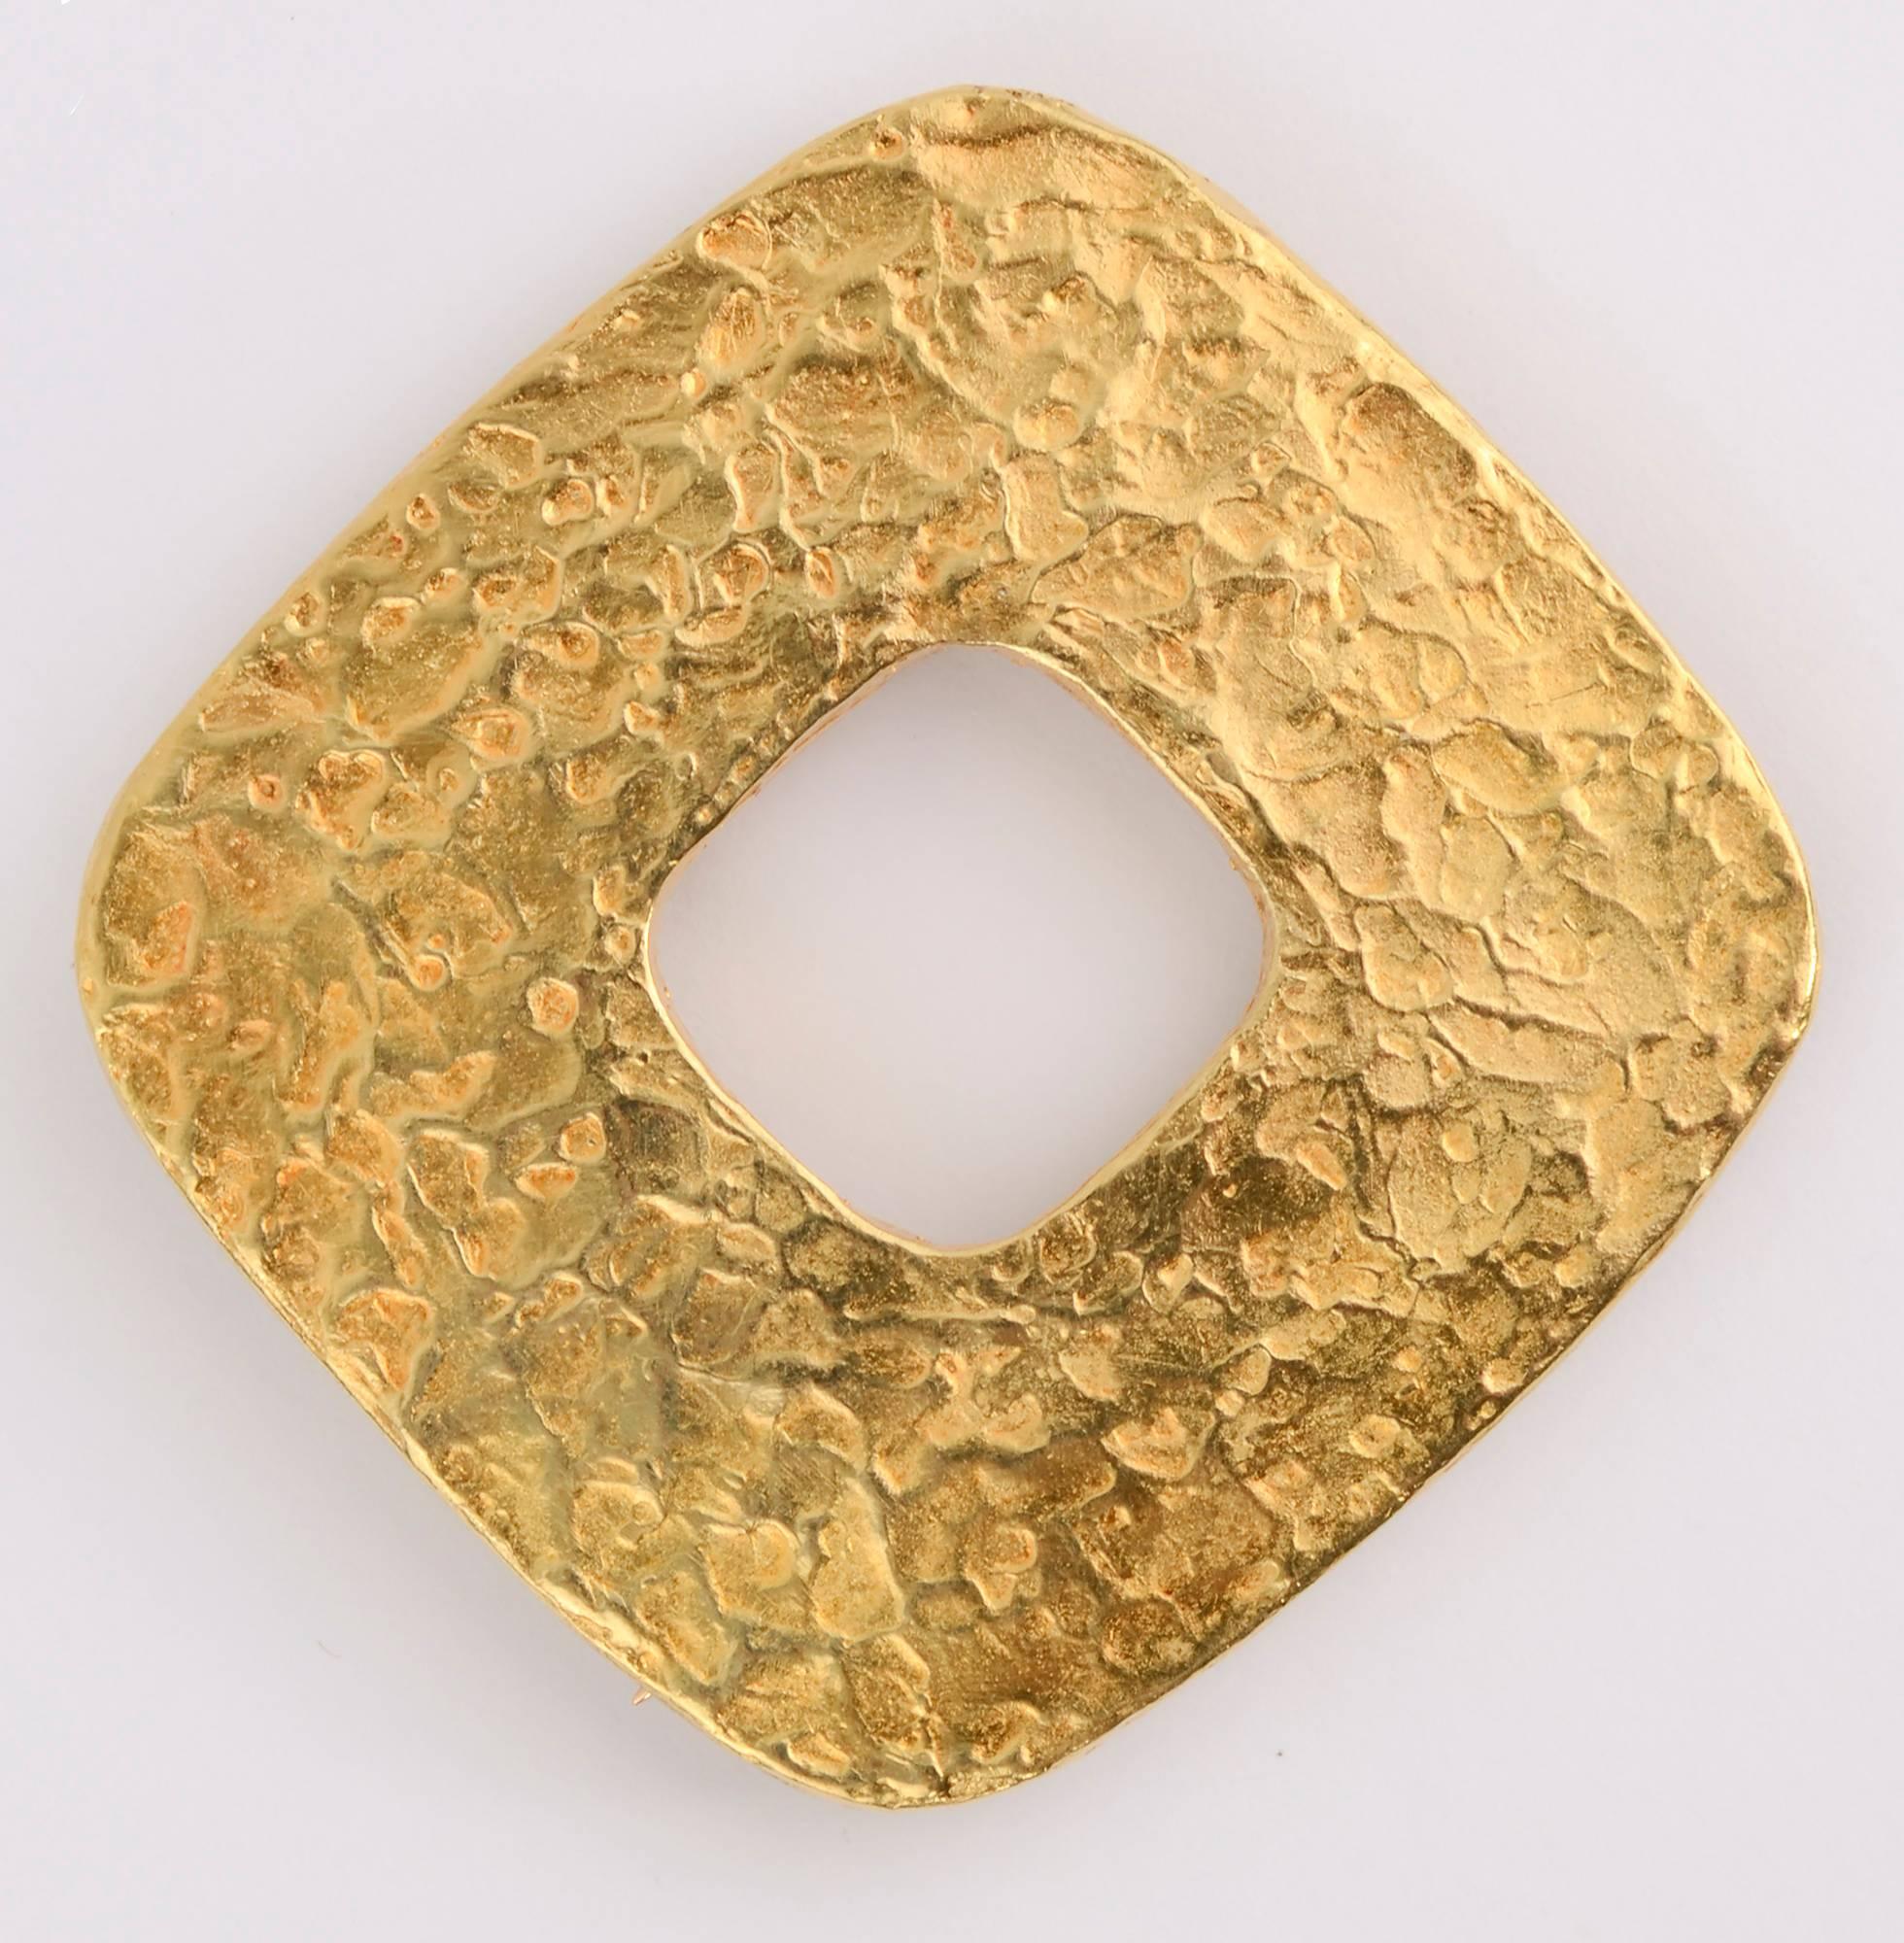 Modernist Ed Wiener Gold Pendant or Brooch